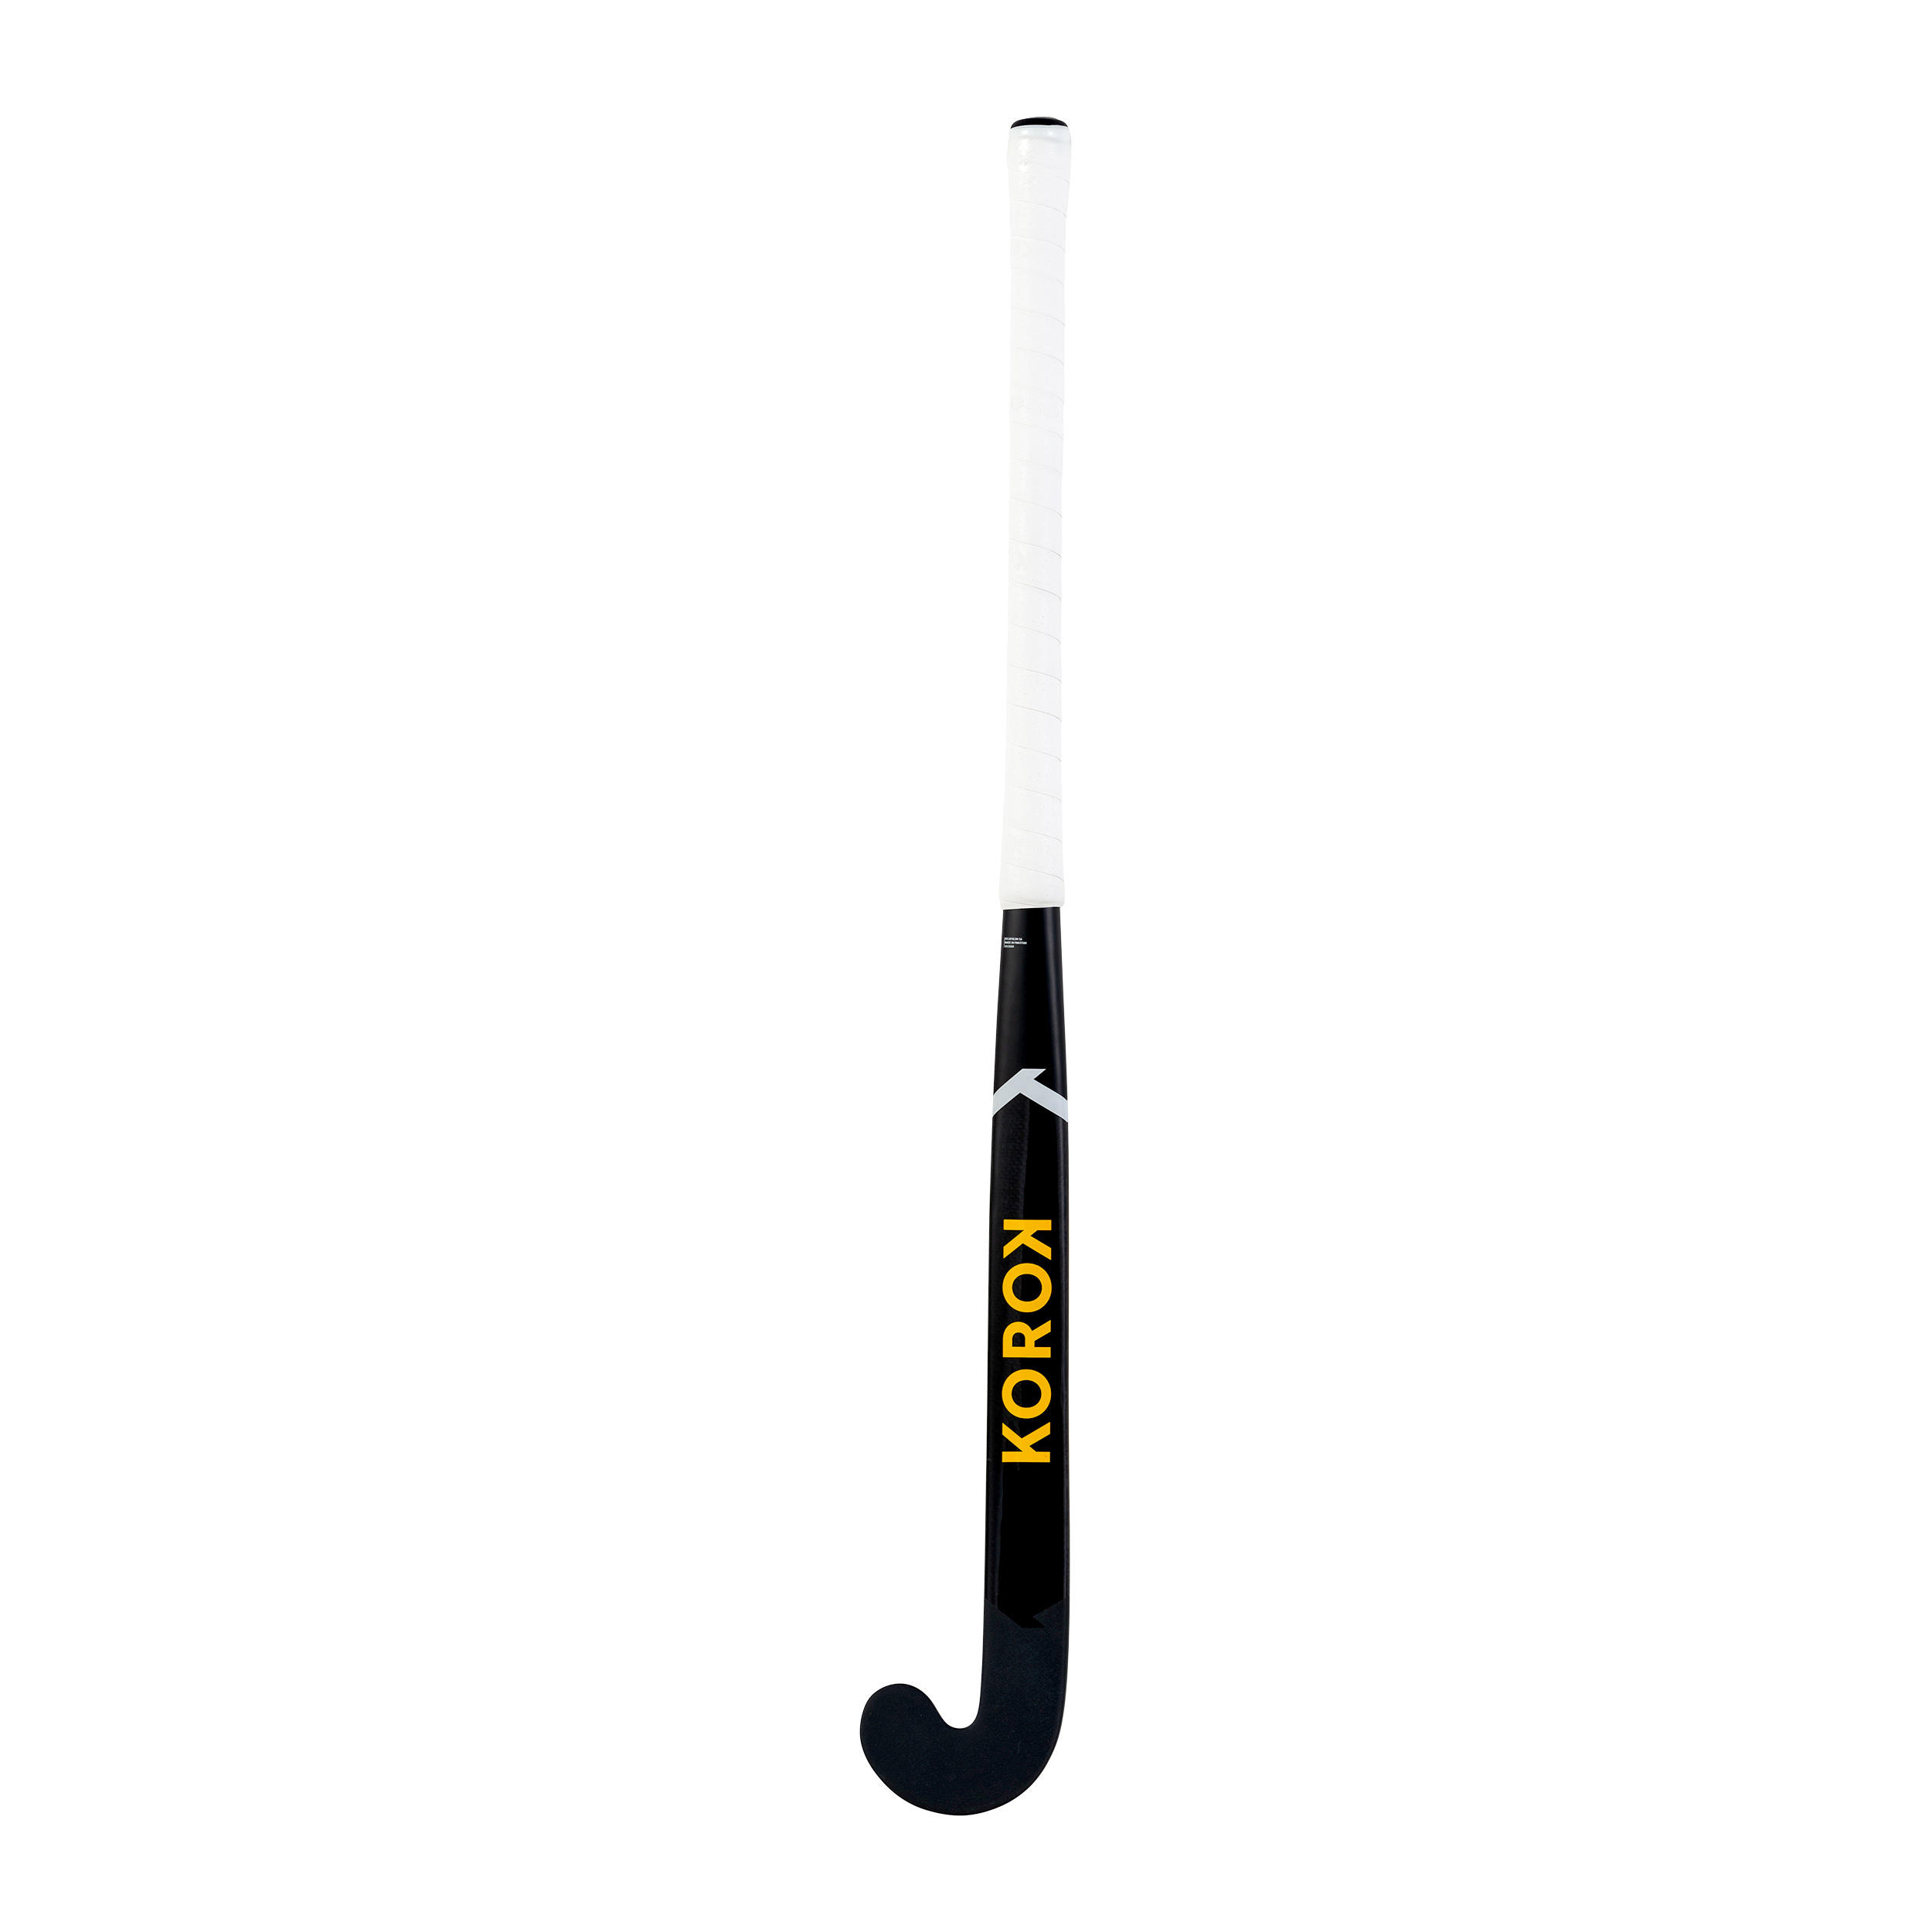 Adult Field Hockey Advanced 95% Carbon Low Bow Stick FH995 - Black/Orange 5/12